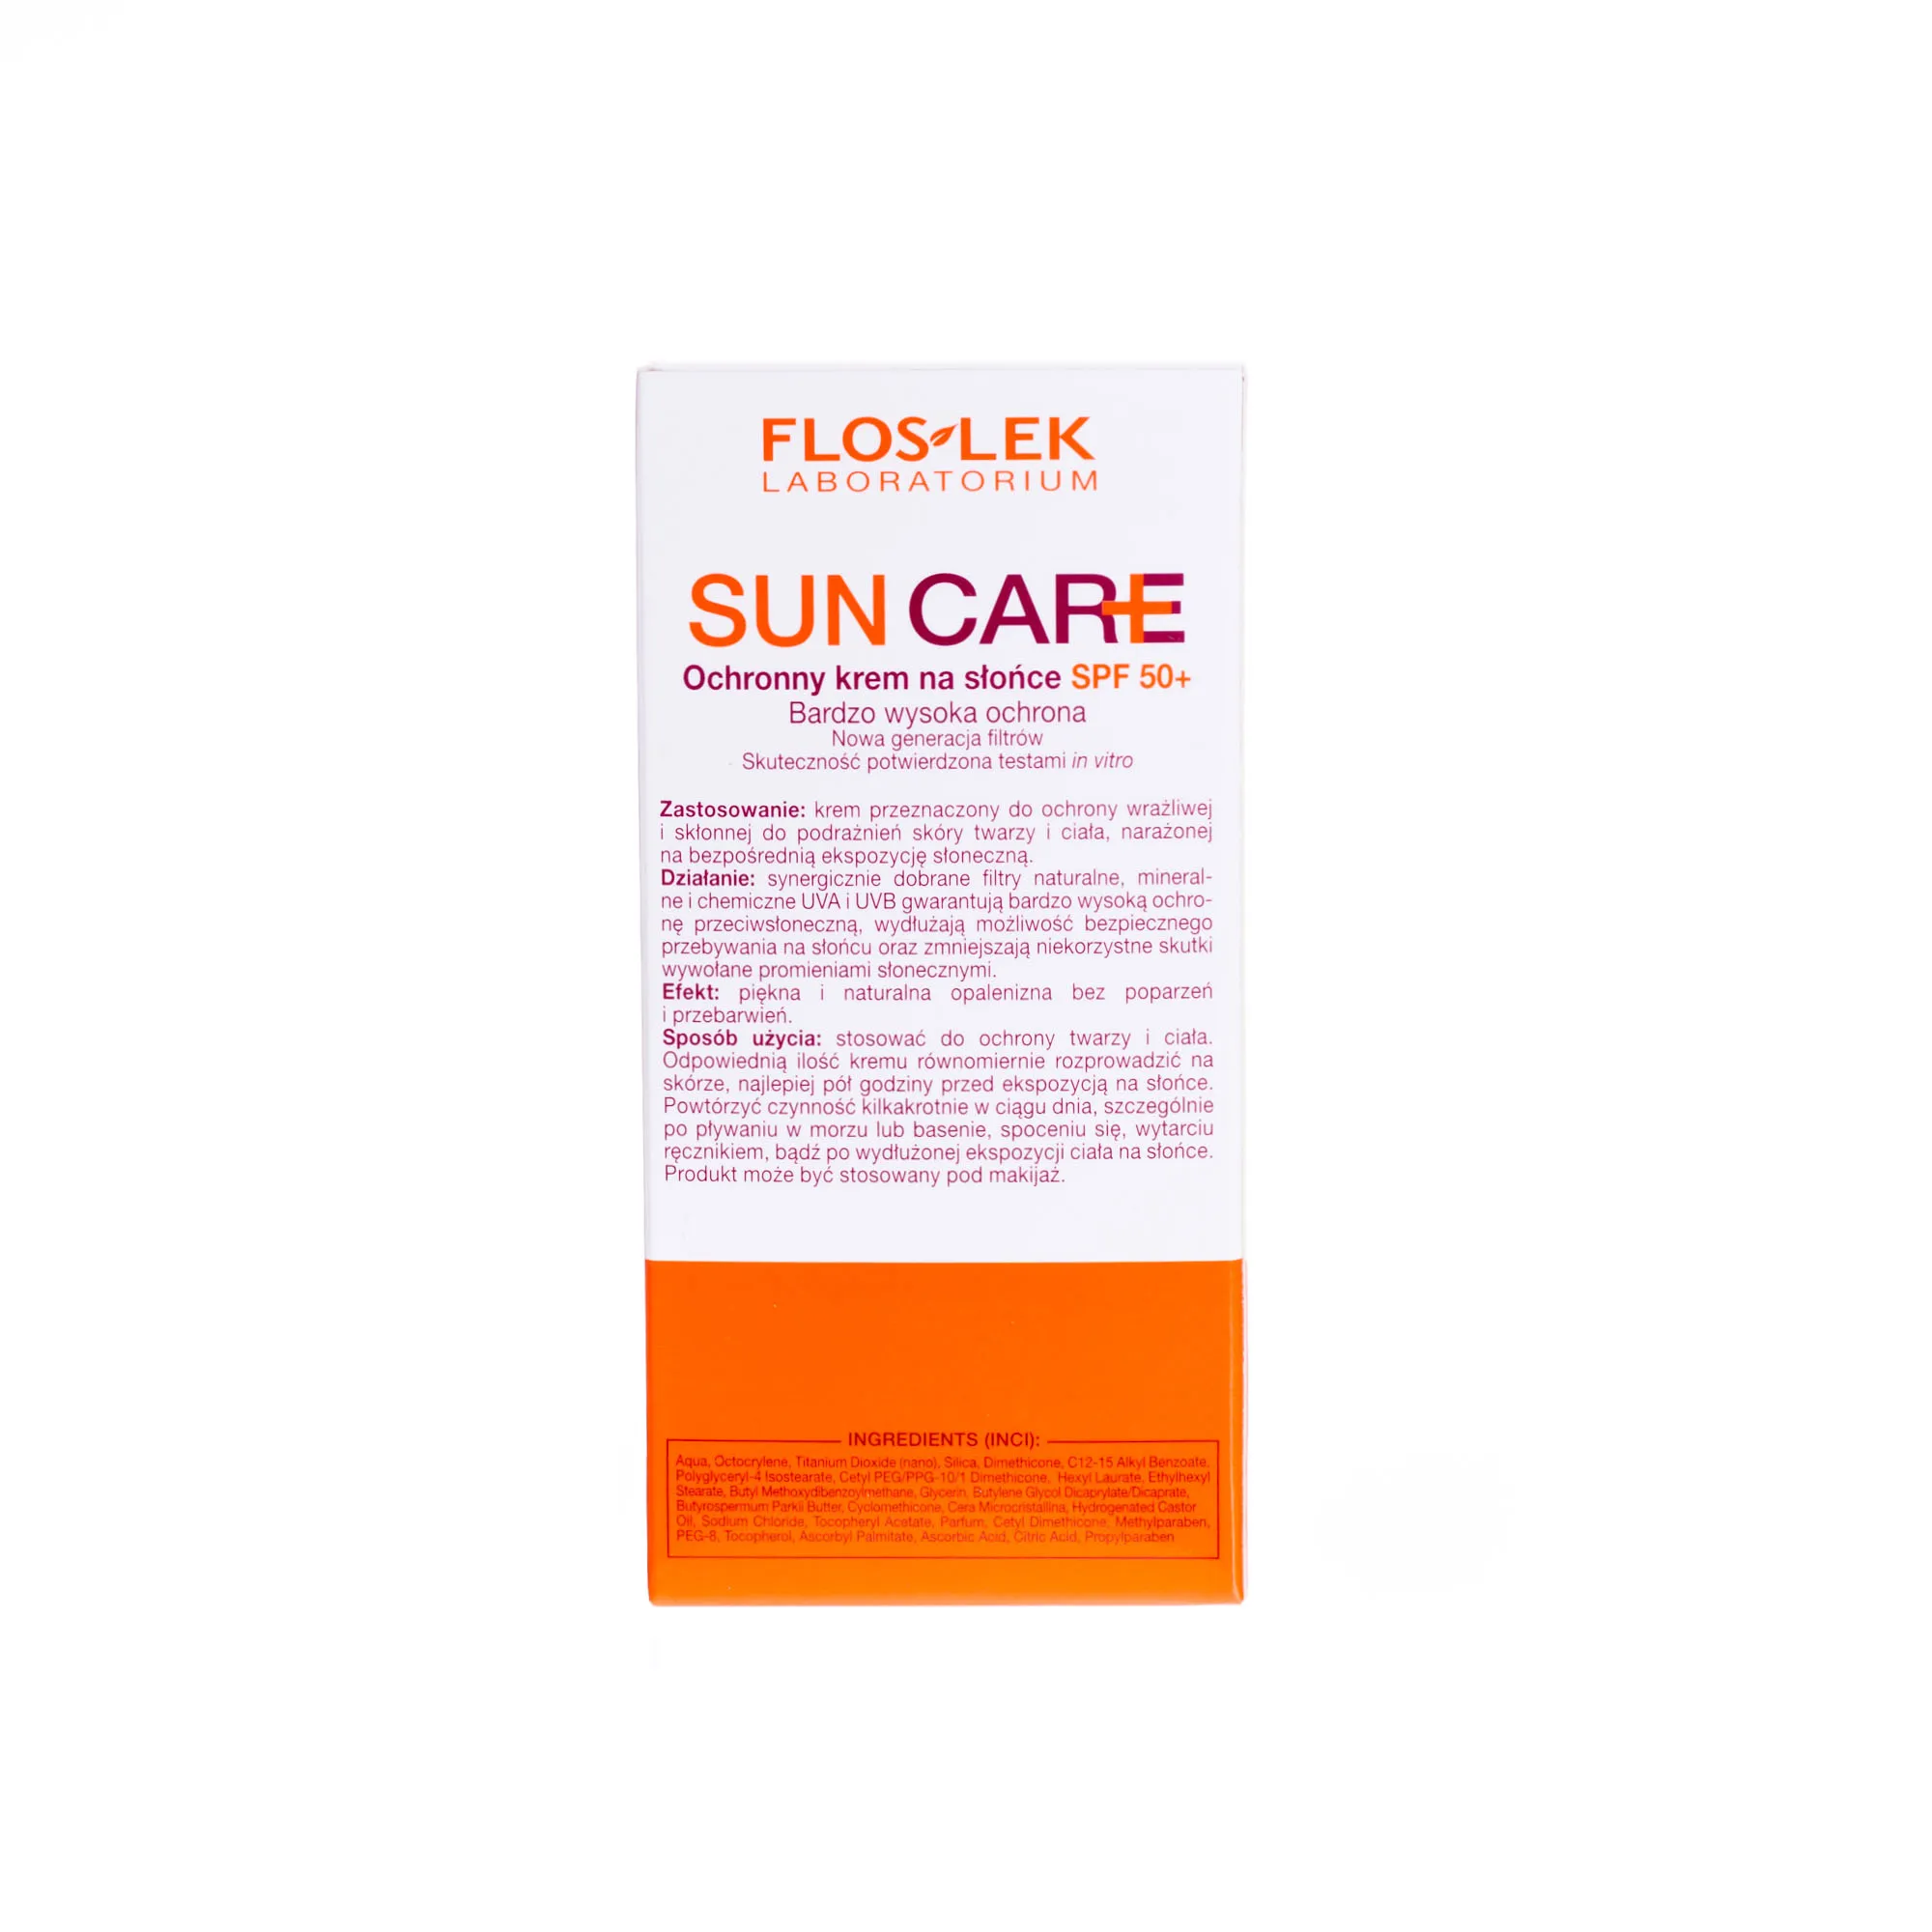 Flos Lek  Sun Care, ochronny krem na słońce, SPF 50+ / 50ml 